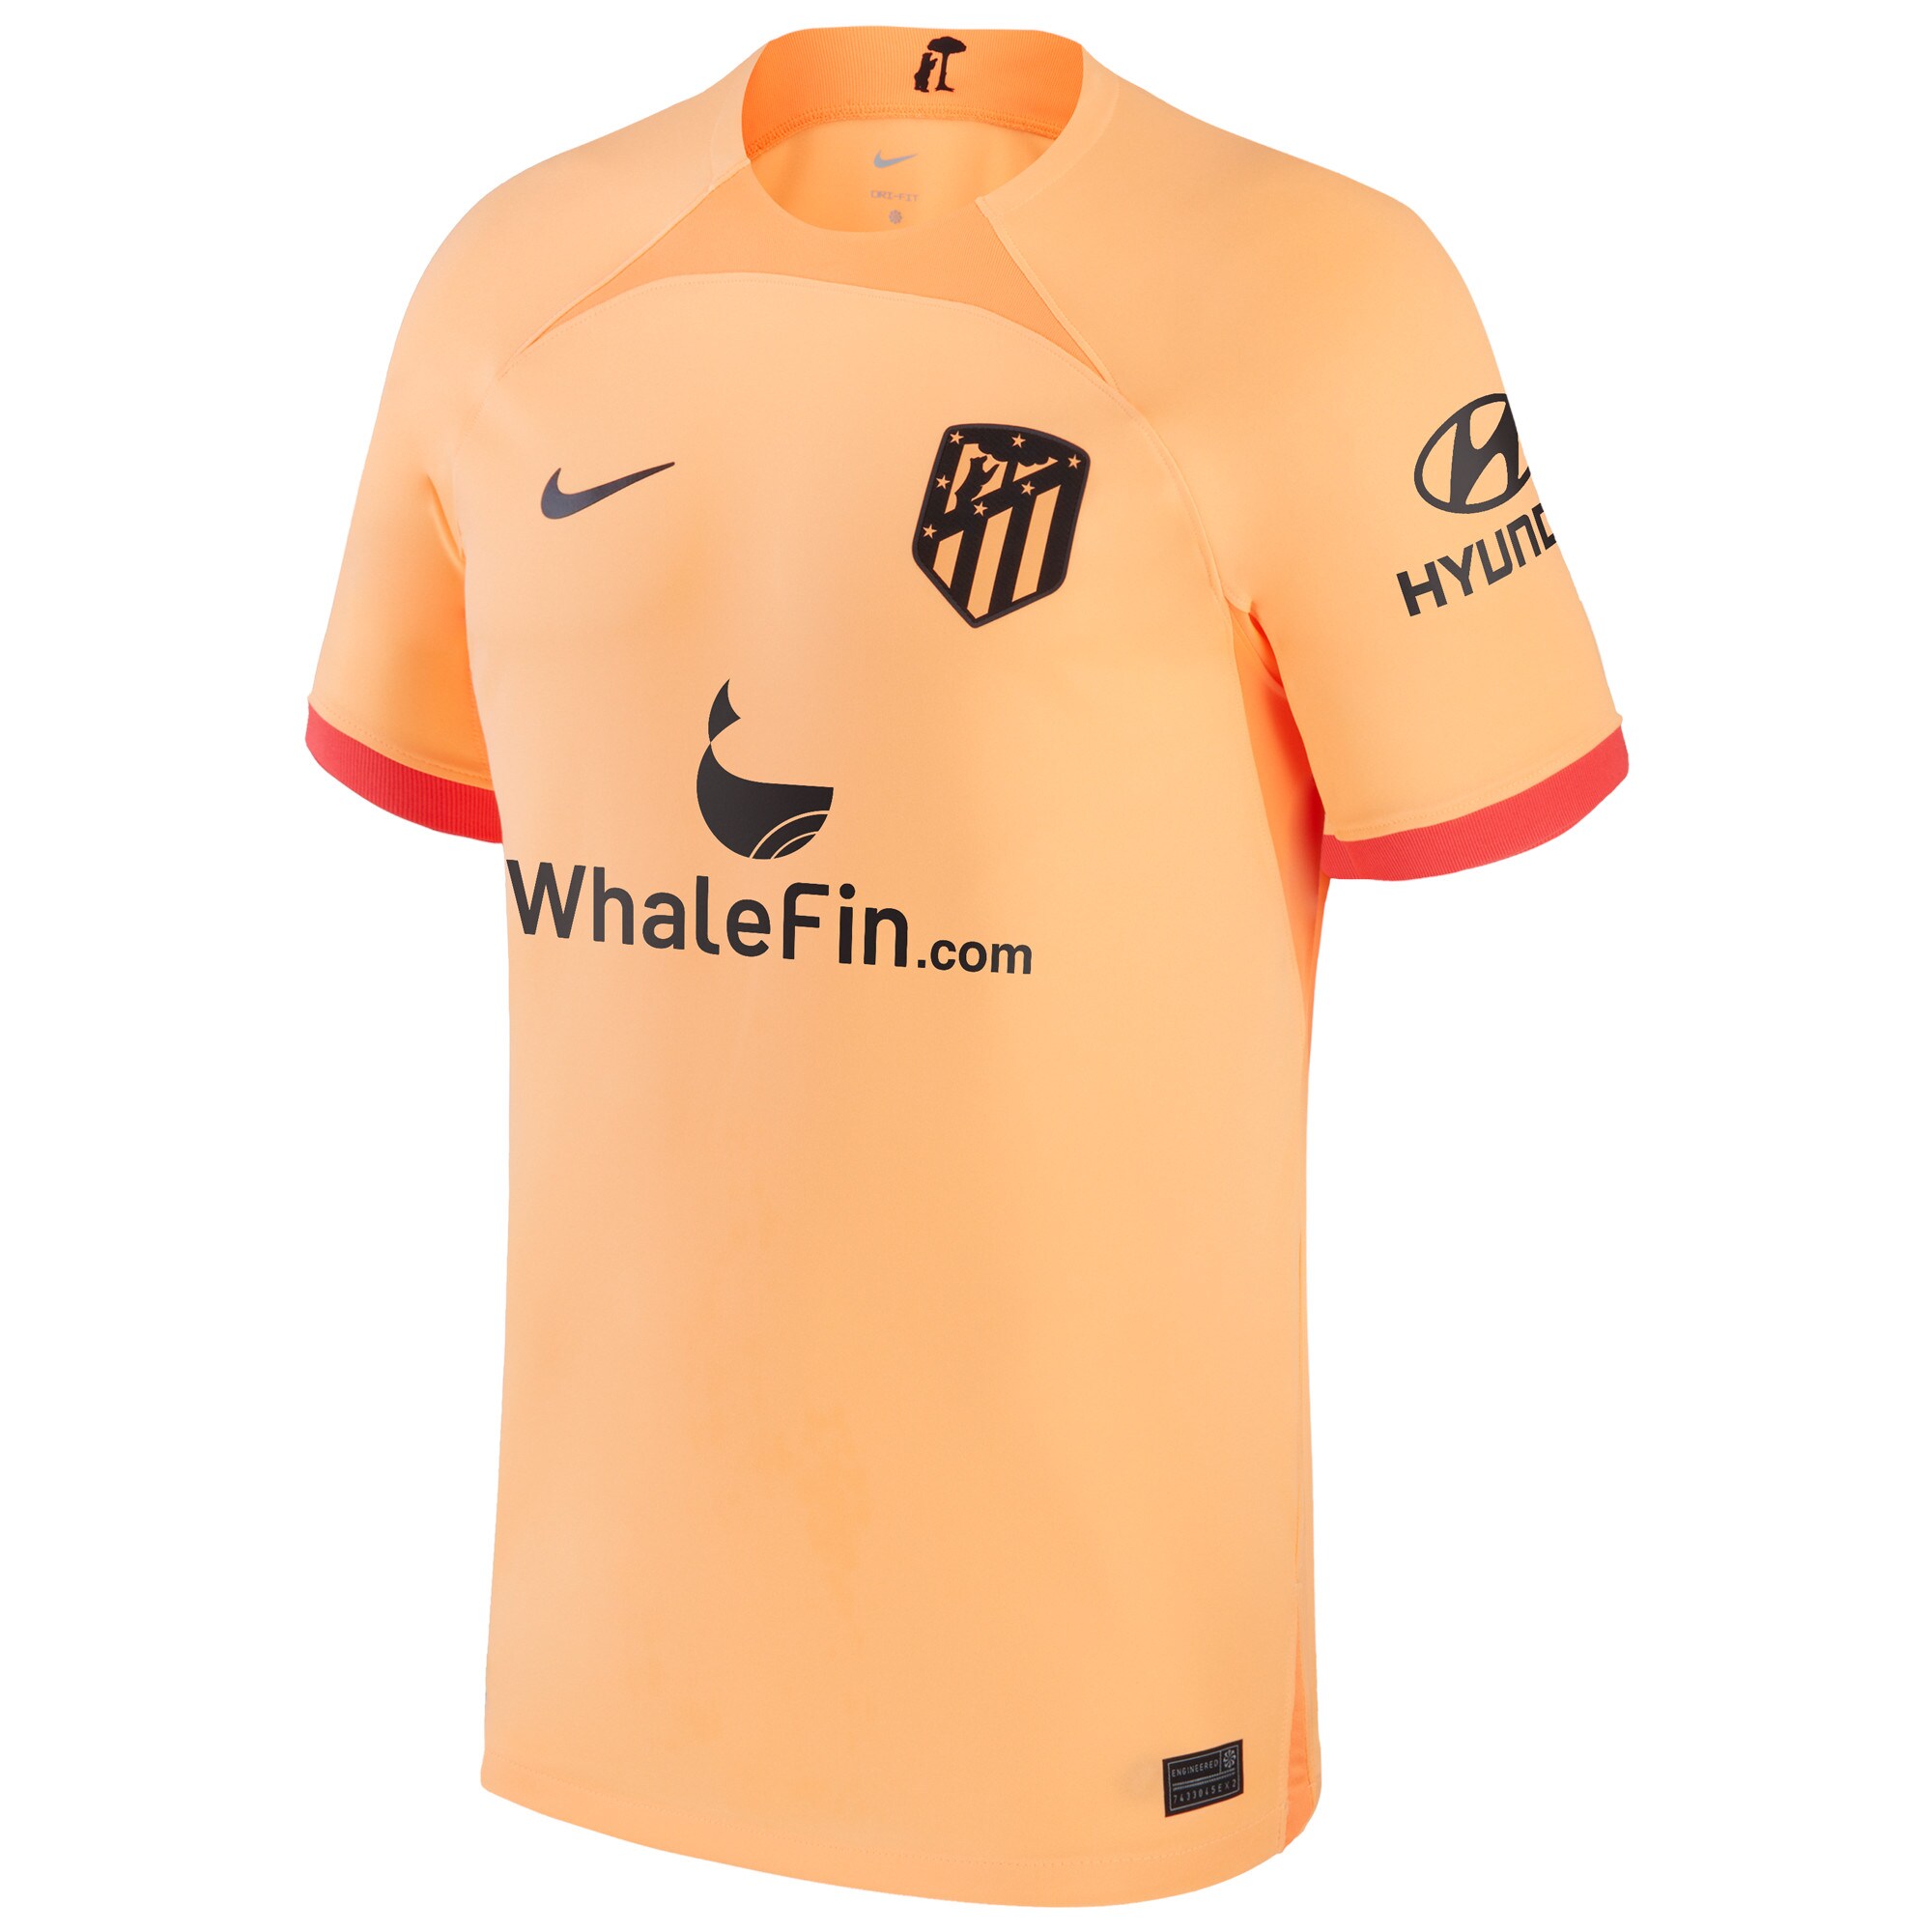 Atlético de Madrid Third Stadium Shirt 2022-23 with Molina 16 printing